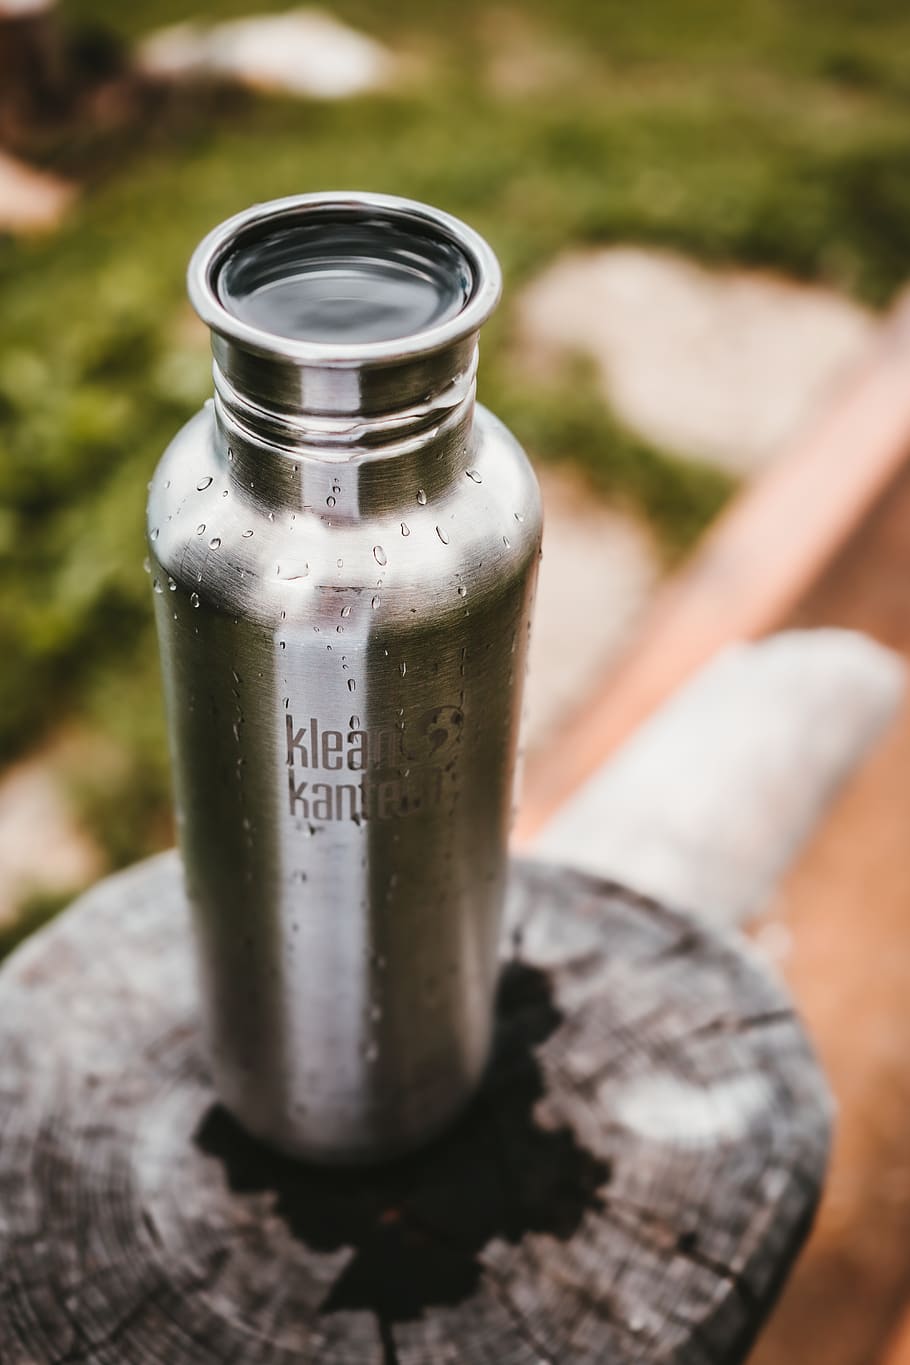 clean kanteen, metal bottle, bottle, water bottle, stainless steel, sustainability, plastic avoid, drink, thirst, hiking